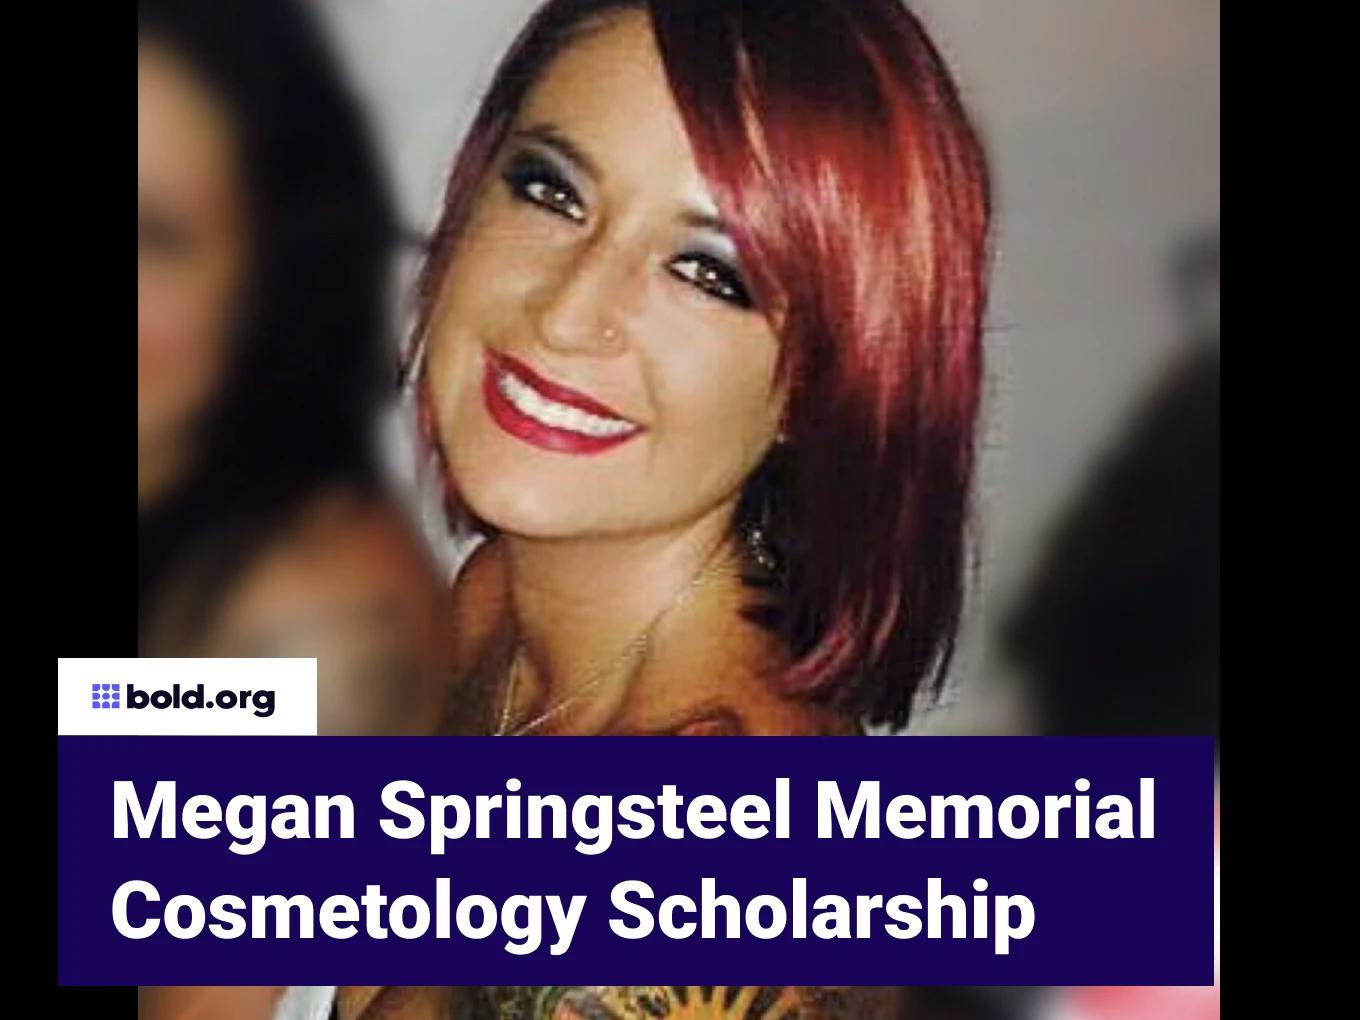 Megan Springsteel Memorial Cosmetology Scholarship